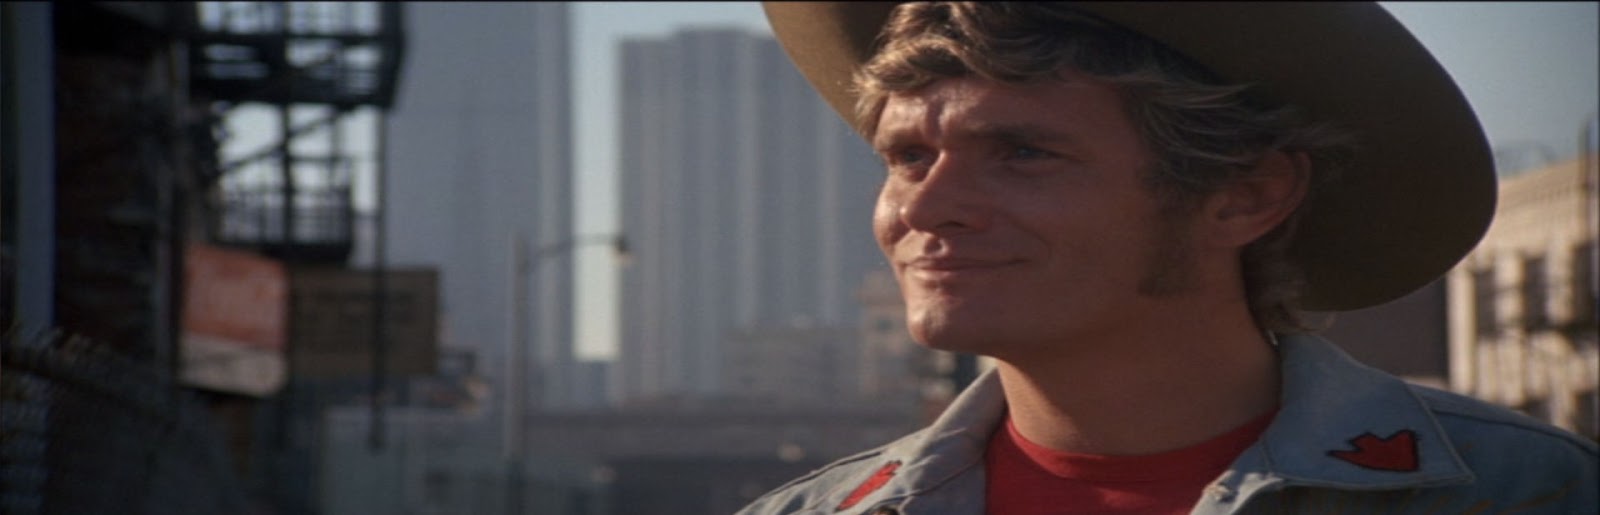 The Nickel Ride (1974) Screenshot 1 